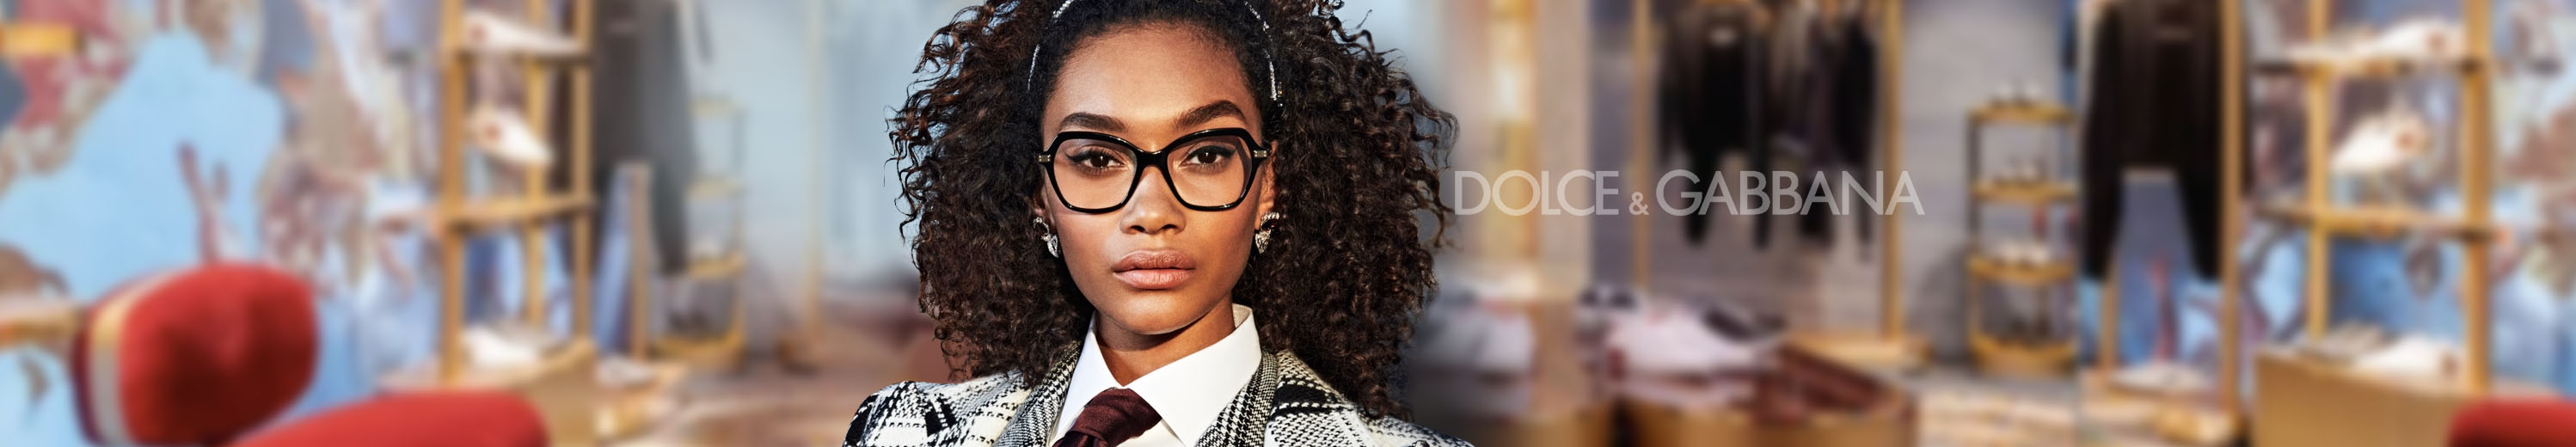 Dolce & Gabbana Butterfly Eyeglasses